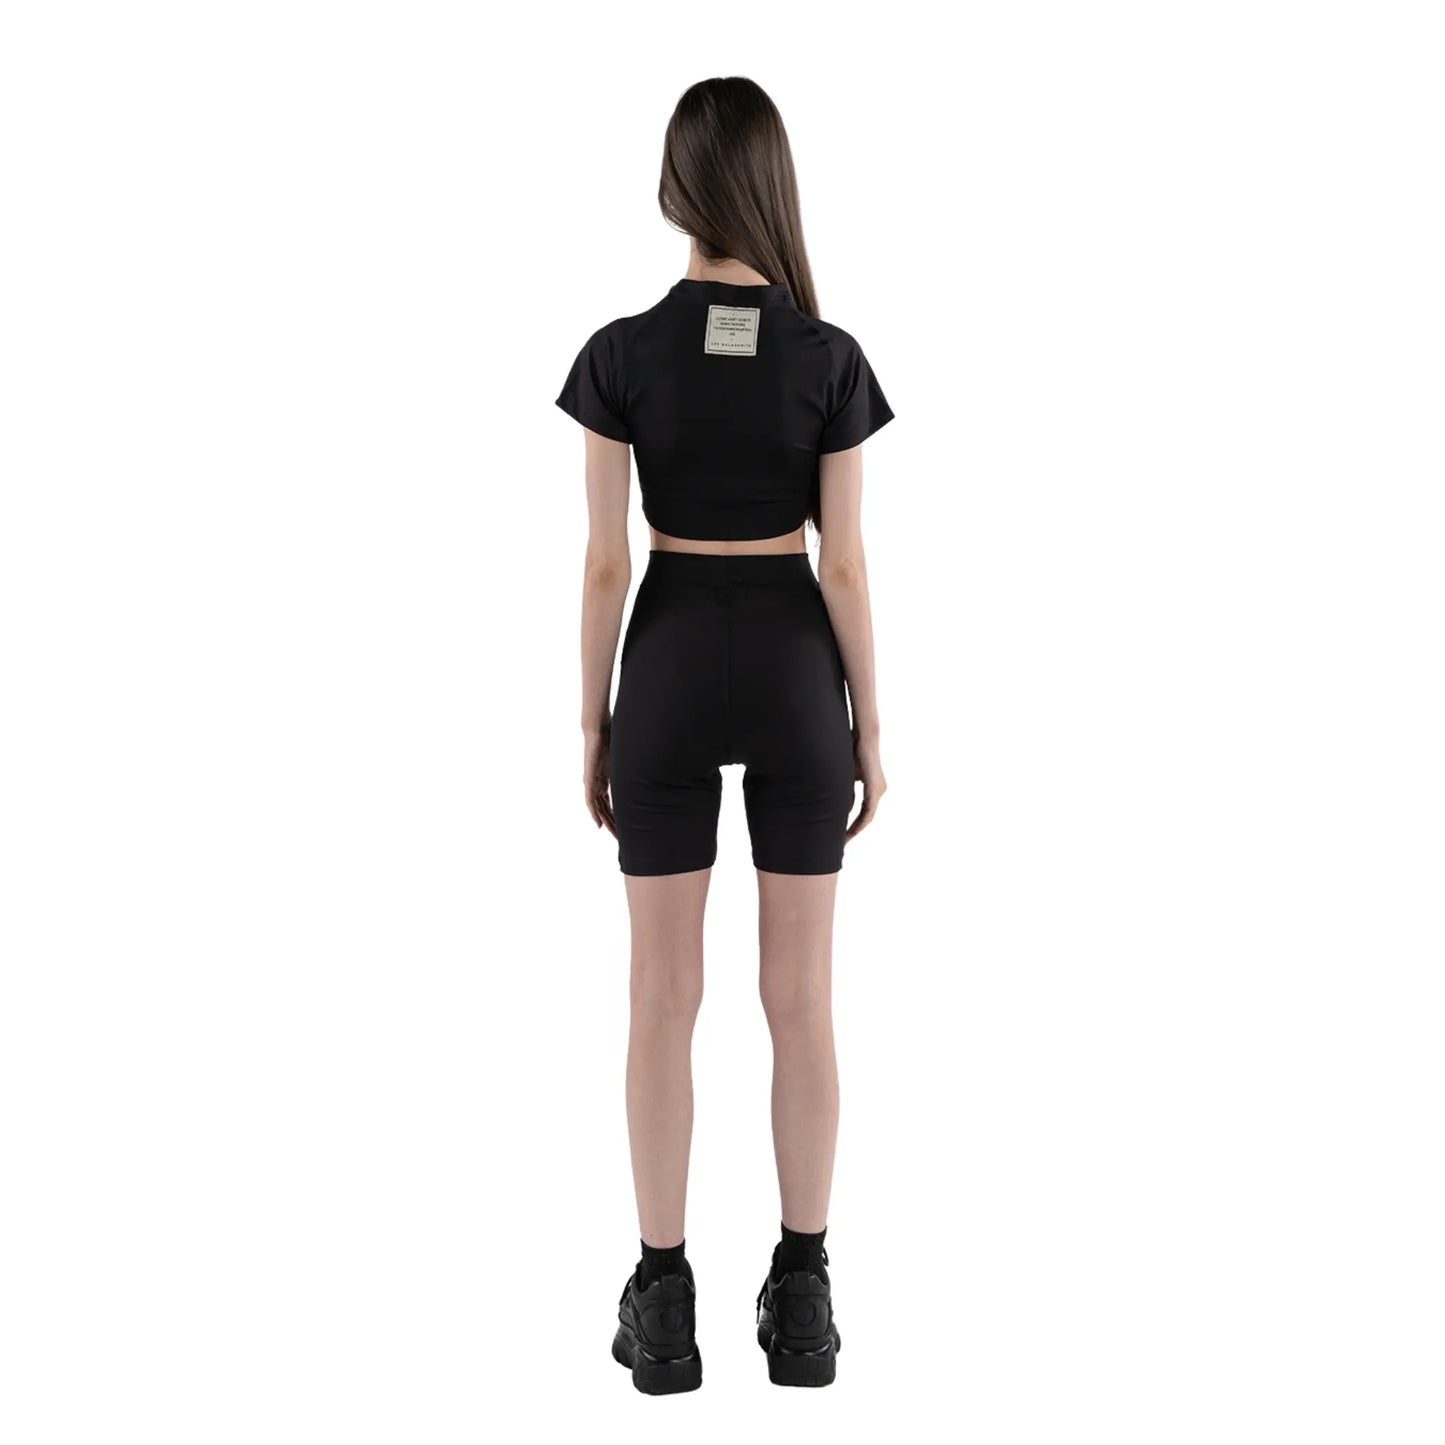 LES MALADROITS Crop Top & Biker Shorts Set Black back view